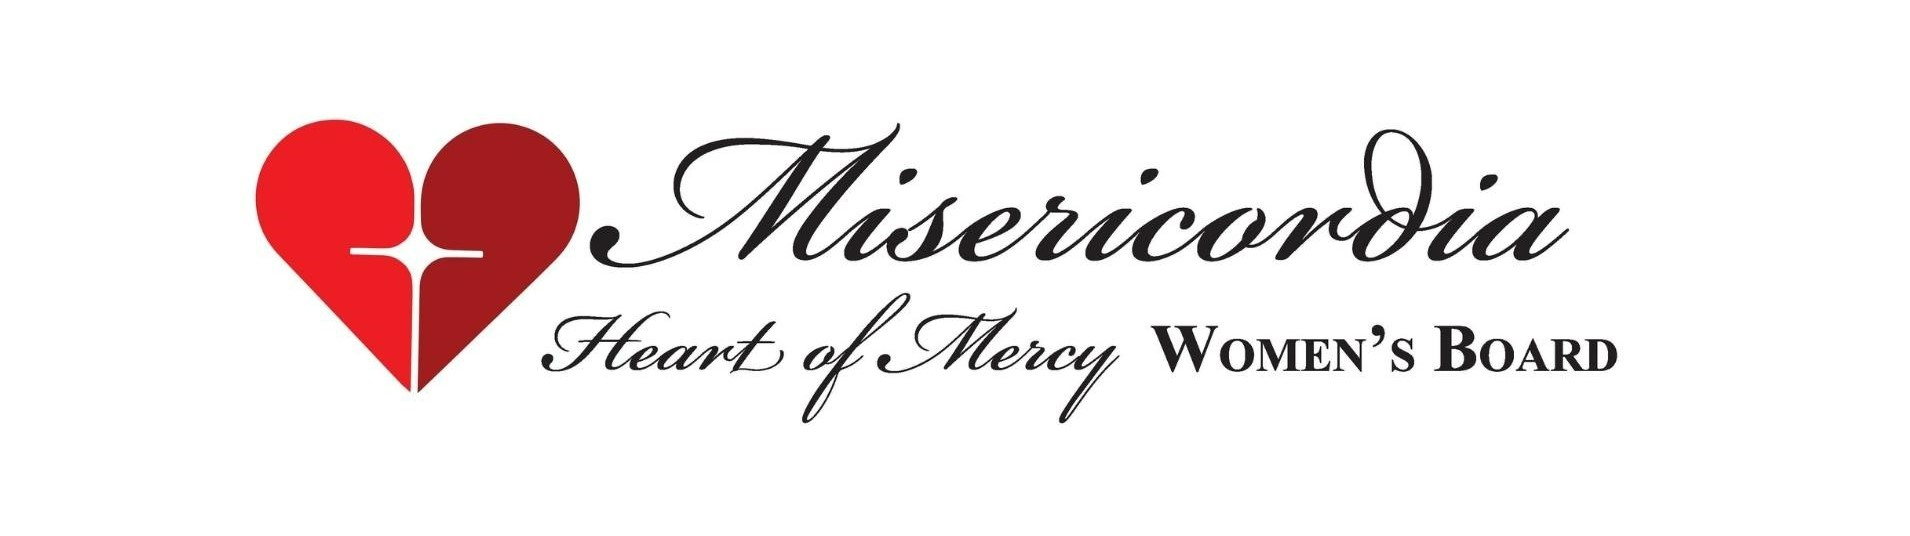 Misericordia Heart of Mercy